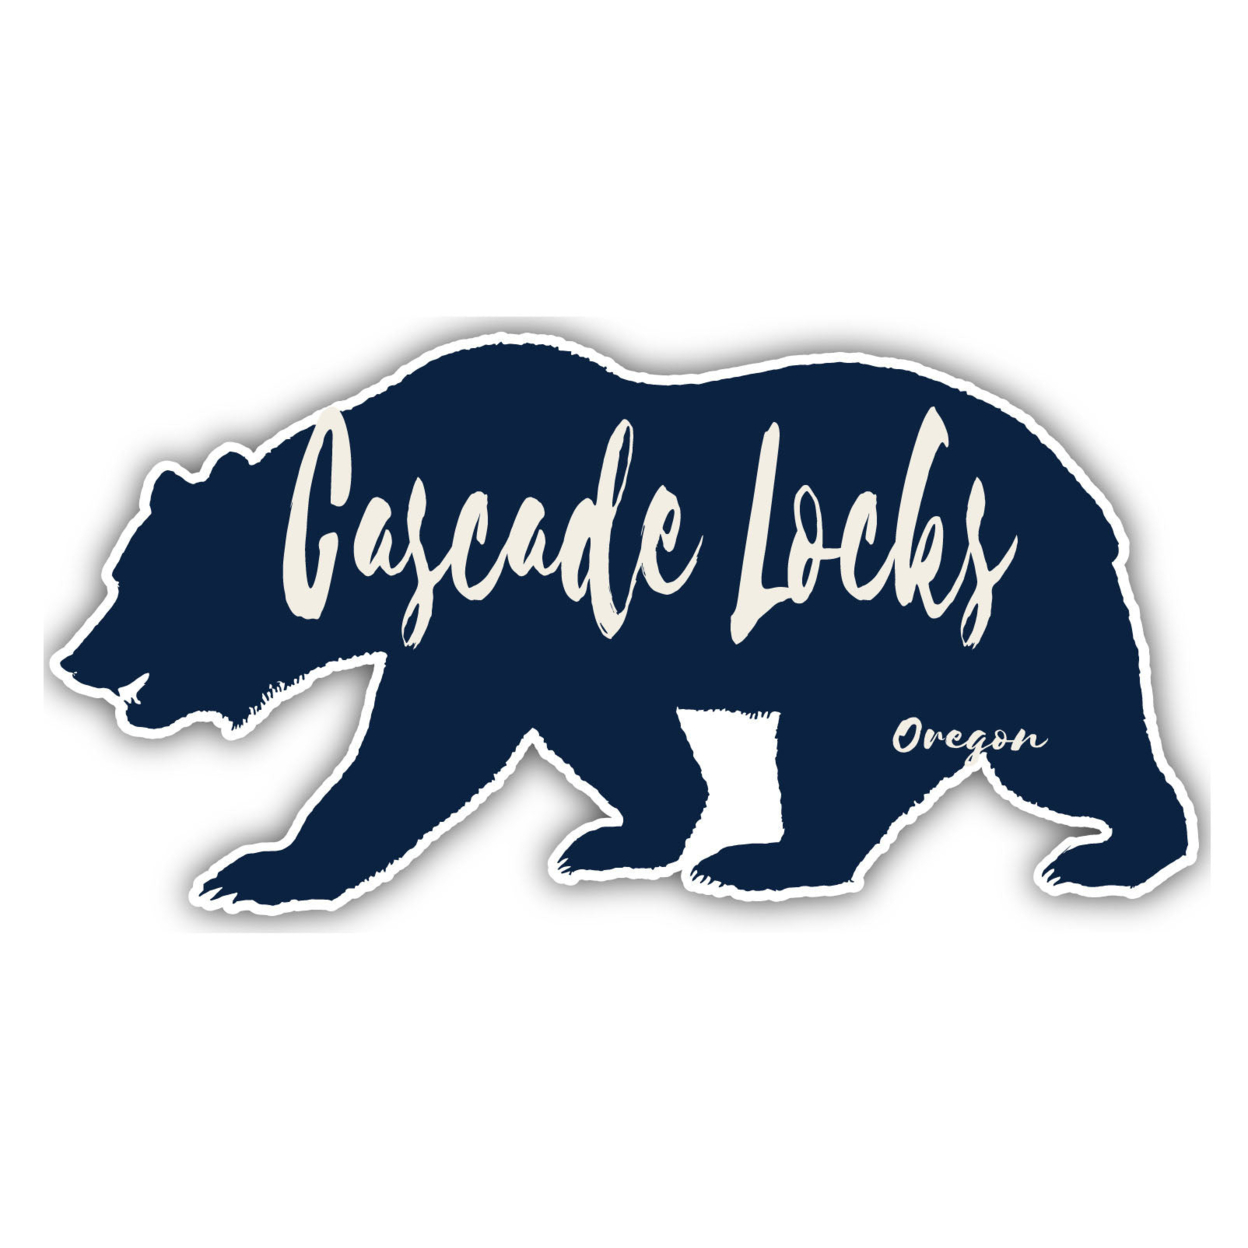 Cascade Locks Oregon Souvenir Decorative Stickers (Choose Theme And Size) - Single Unit, 10-Inch, Adventures Awaits